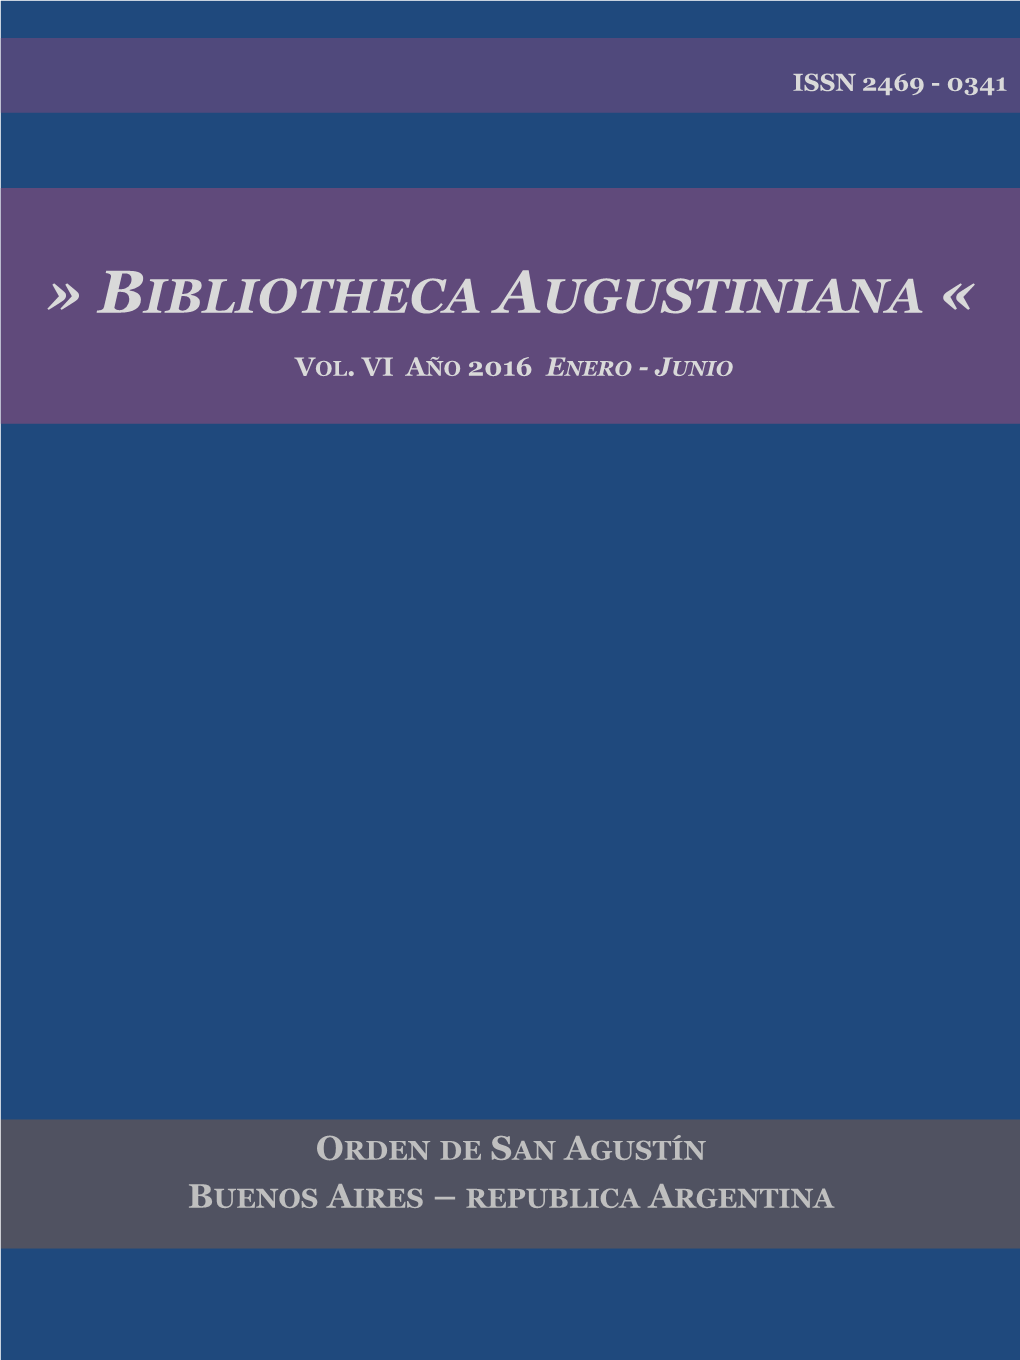 Bibliotheca Augustiniana «